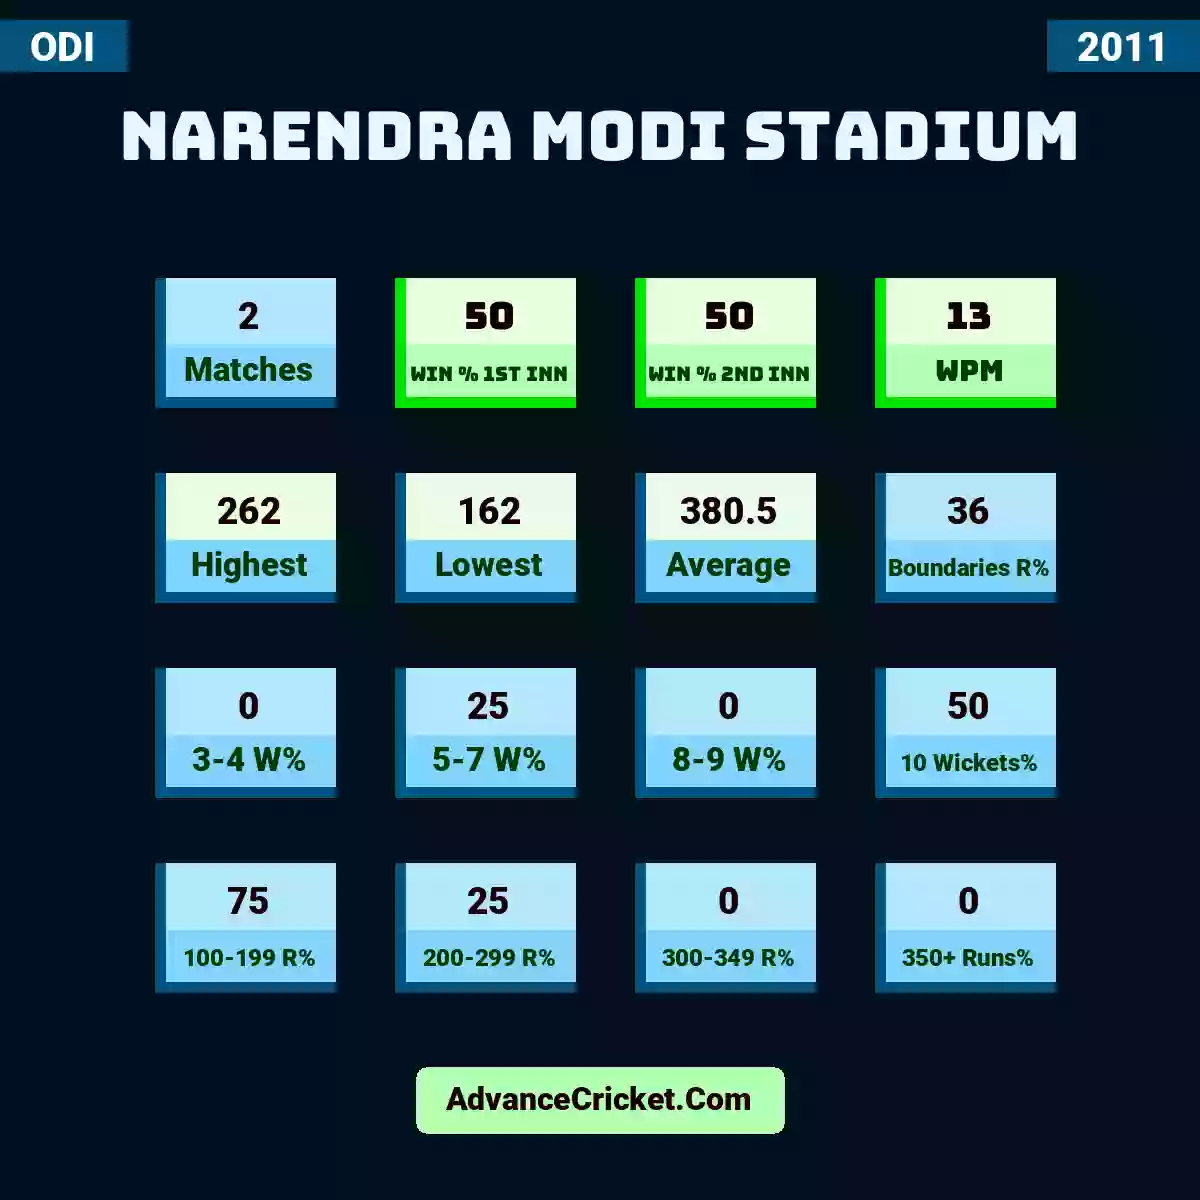 Image showing Narendra Modi Stadium with Matches: 2, Win % 1st Inn: 50, Win % 2nd Inn: 50, WPM: 13, Highest: 262, Lowest: 162, Average: 380.5, Boundaries R%: 36, 3-4 W%: 0, 5-7 W%: 25, 8-9 W%: 0, 10 Wickets%: 50, 100-199 R%: 75, 200-299 R%: 25, 300-349 R%: 0, 350+ Runs%: 0.